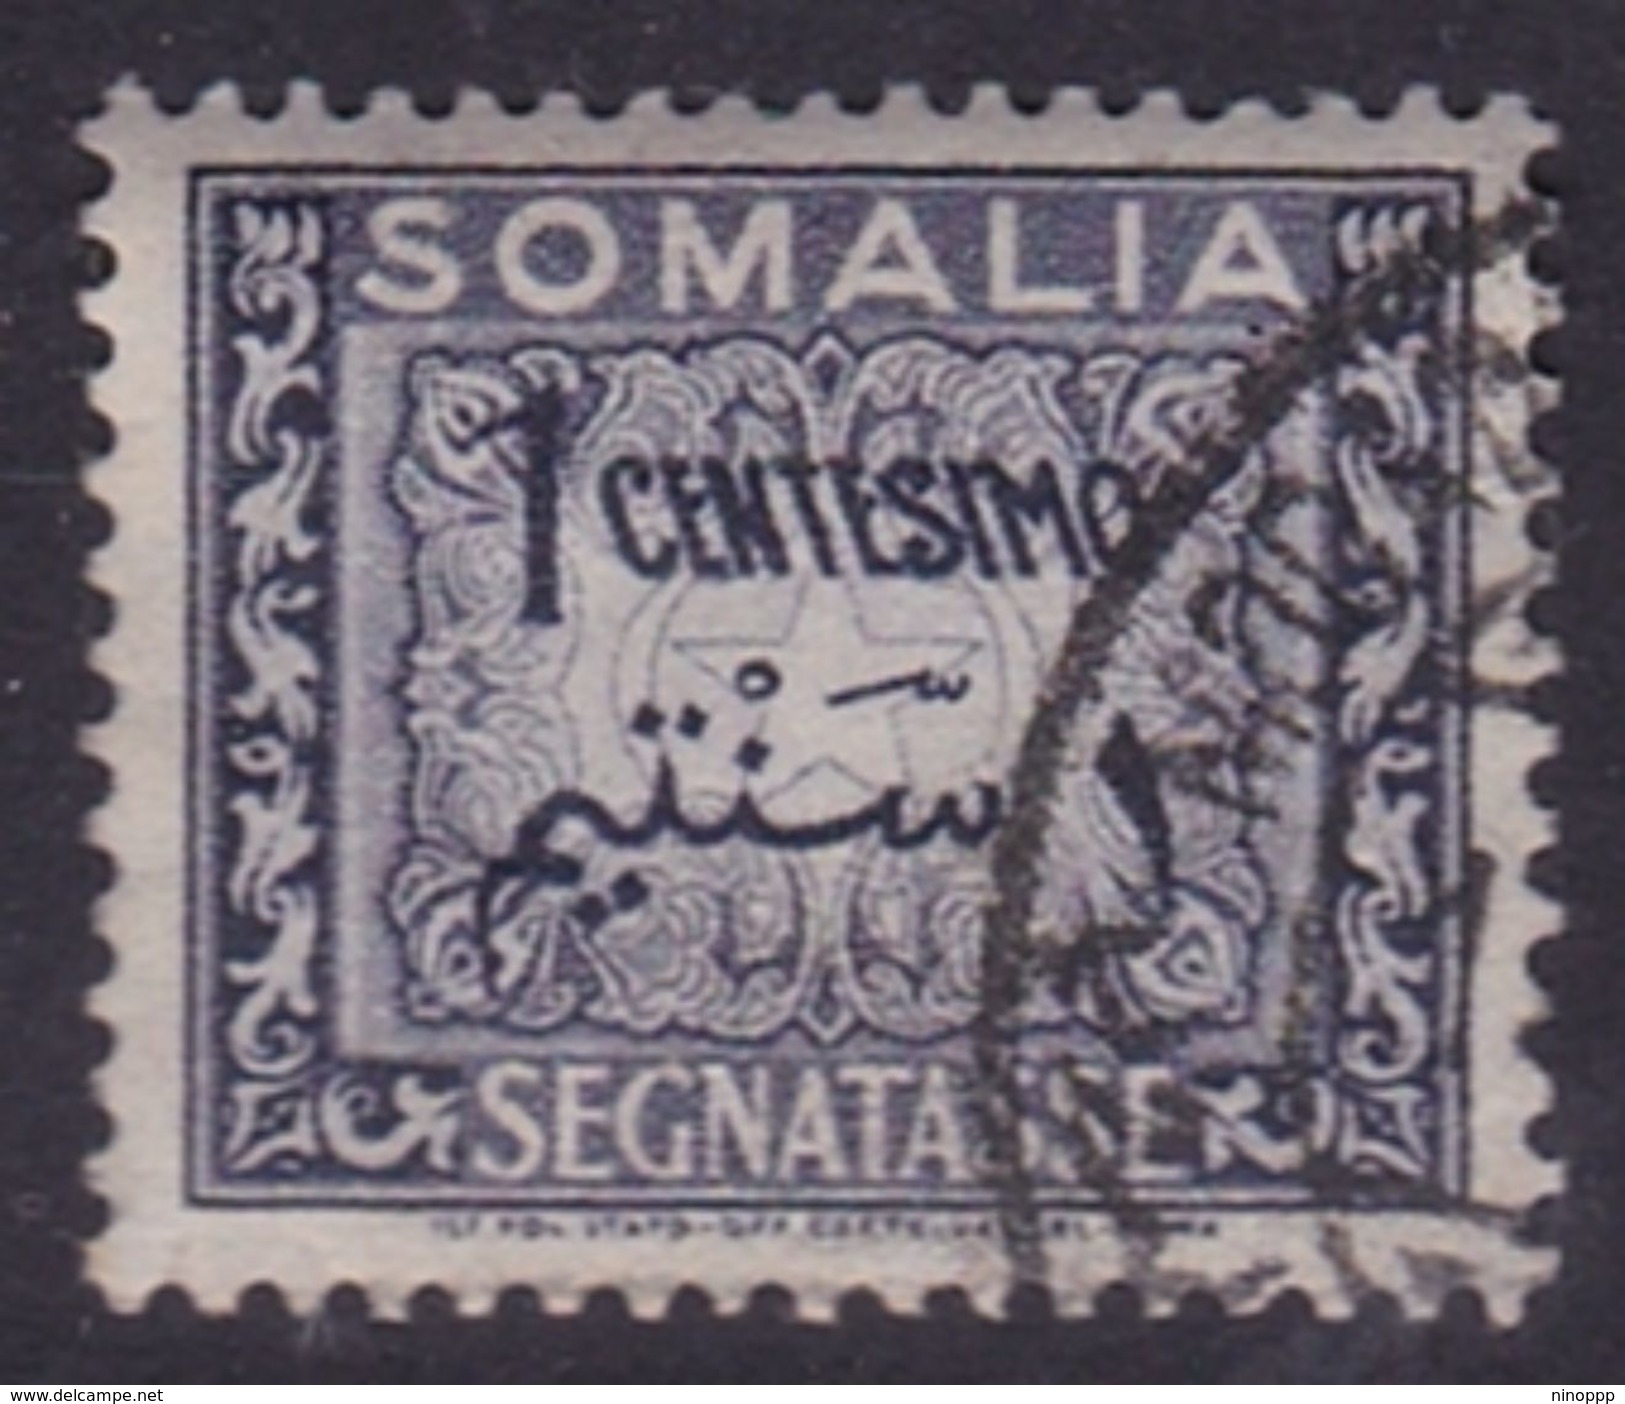 Somalia Scott J55 1950 Postage Due 1c Dark Gray, Used - Somalia (AFIS)